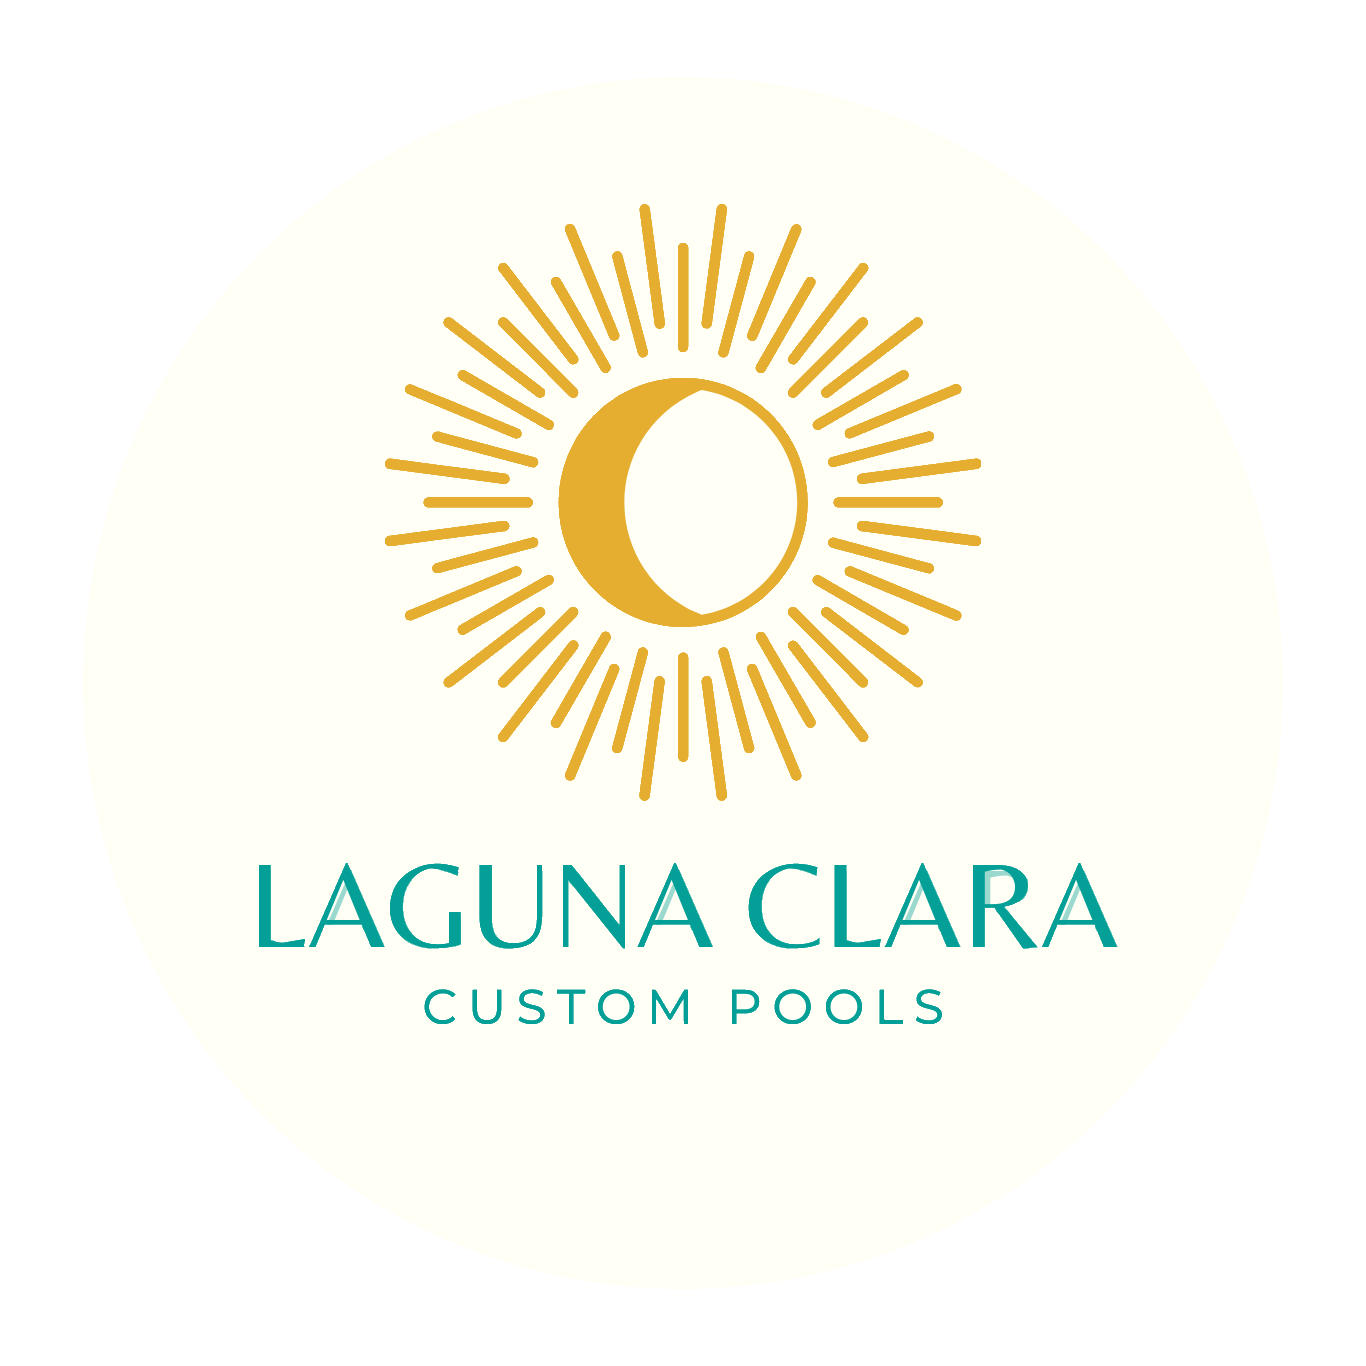 Laguna Clara Custom Pools